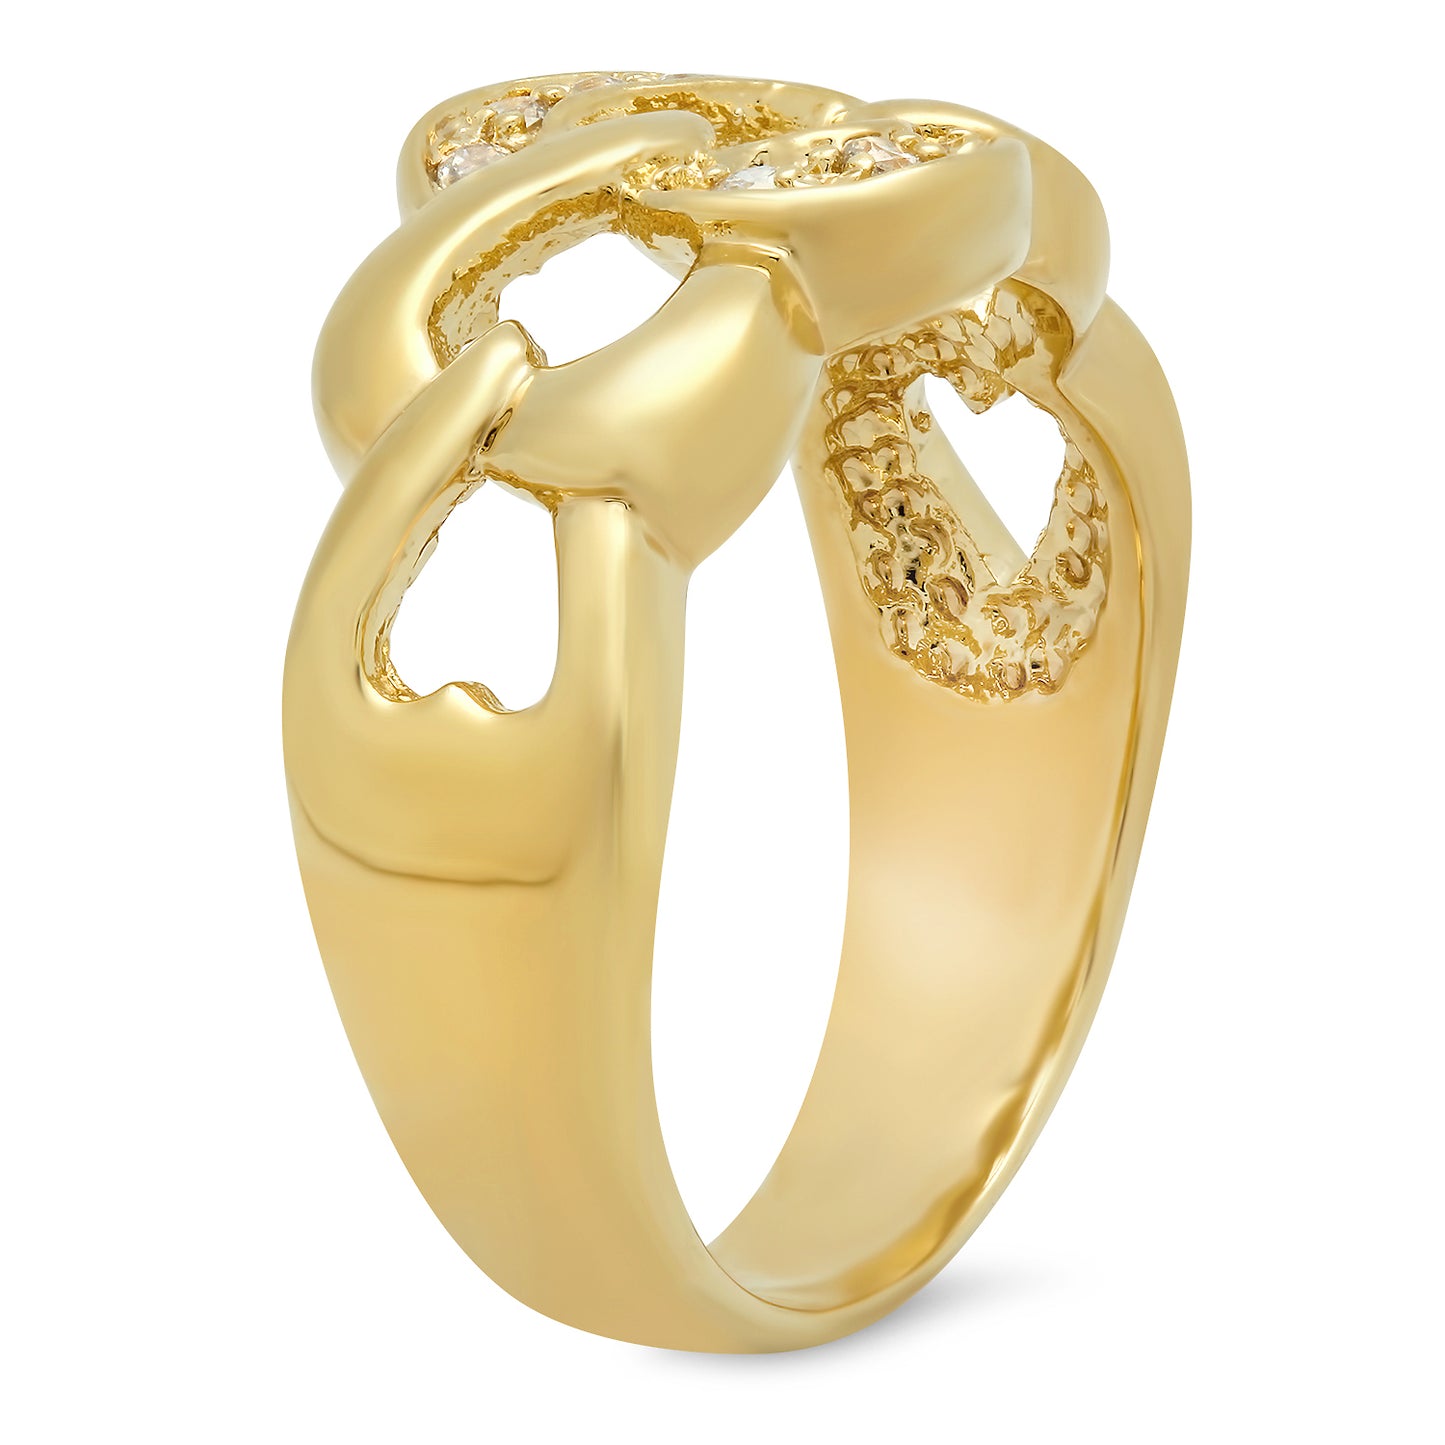 10mm Gold Plated Interlocking Hearts Ring w/Round CZ Accents + Jewelry Polishing Cloth (SKU: GL-LR36)